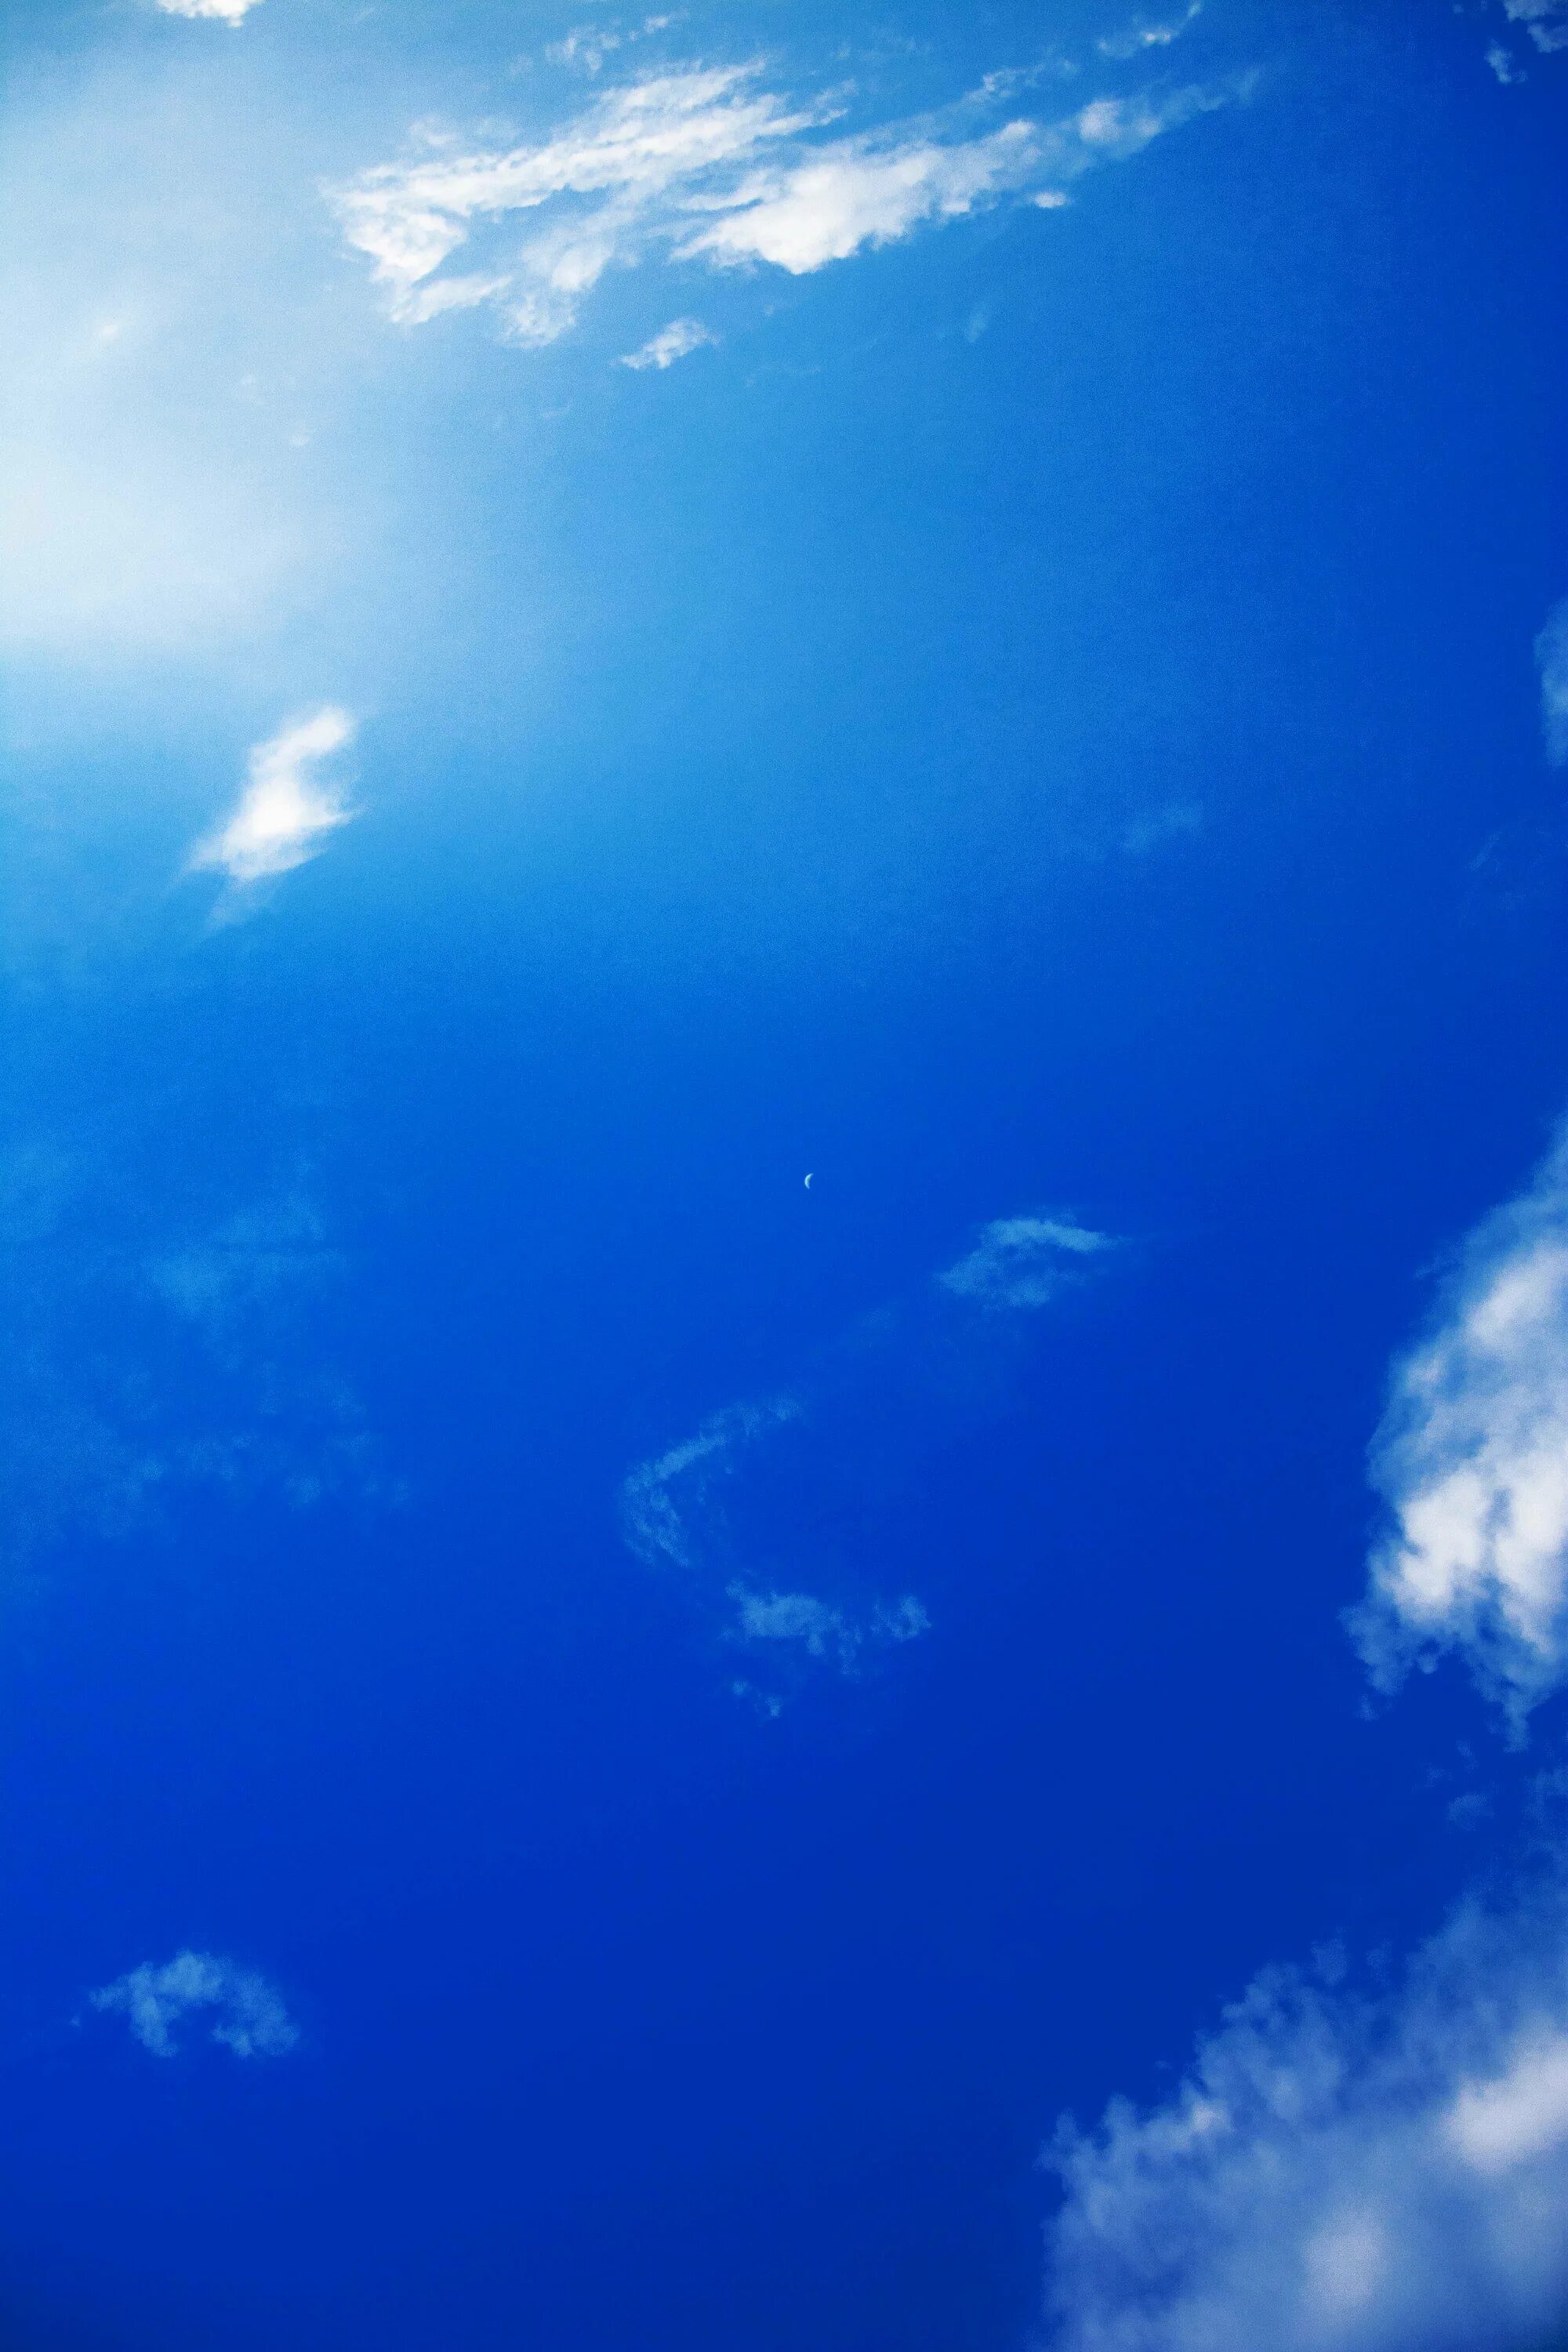 Например небо голубое. Голубое небо. Чистое голубое небо. Безоблачное небо. Красивое голубое небо с облаками.